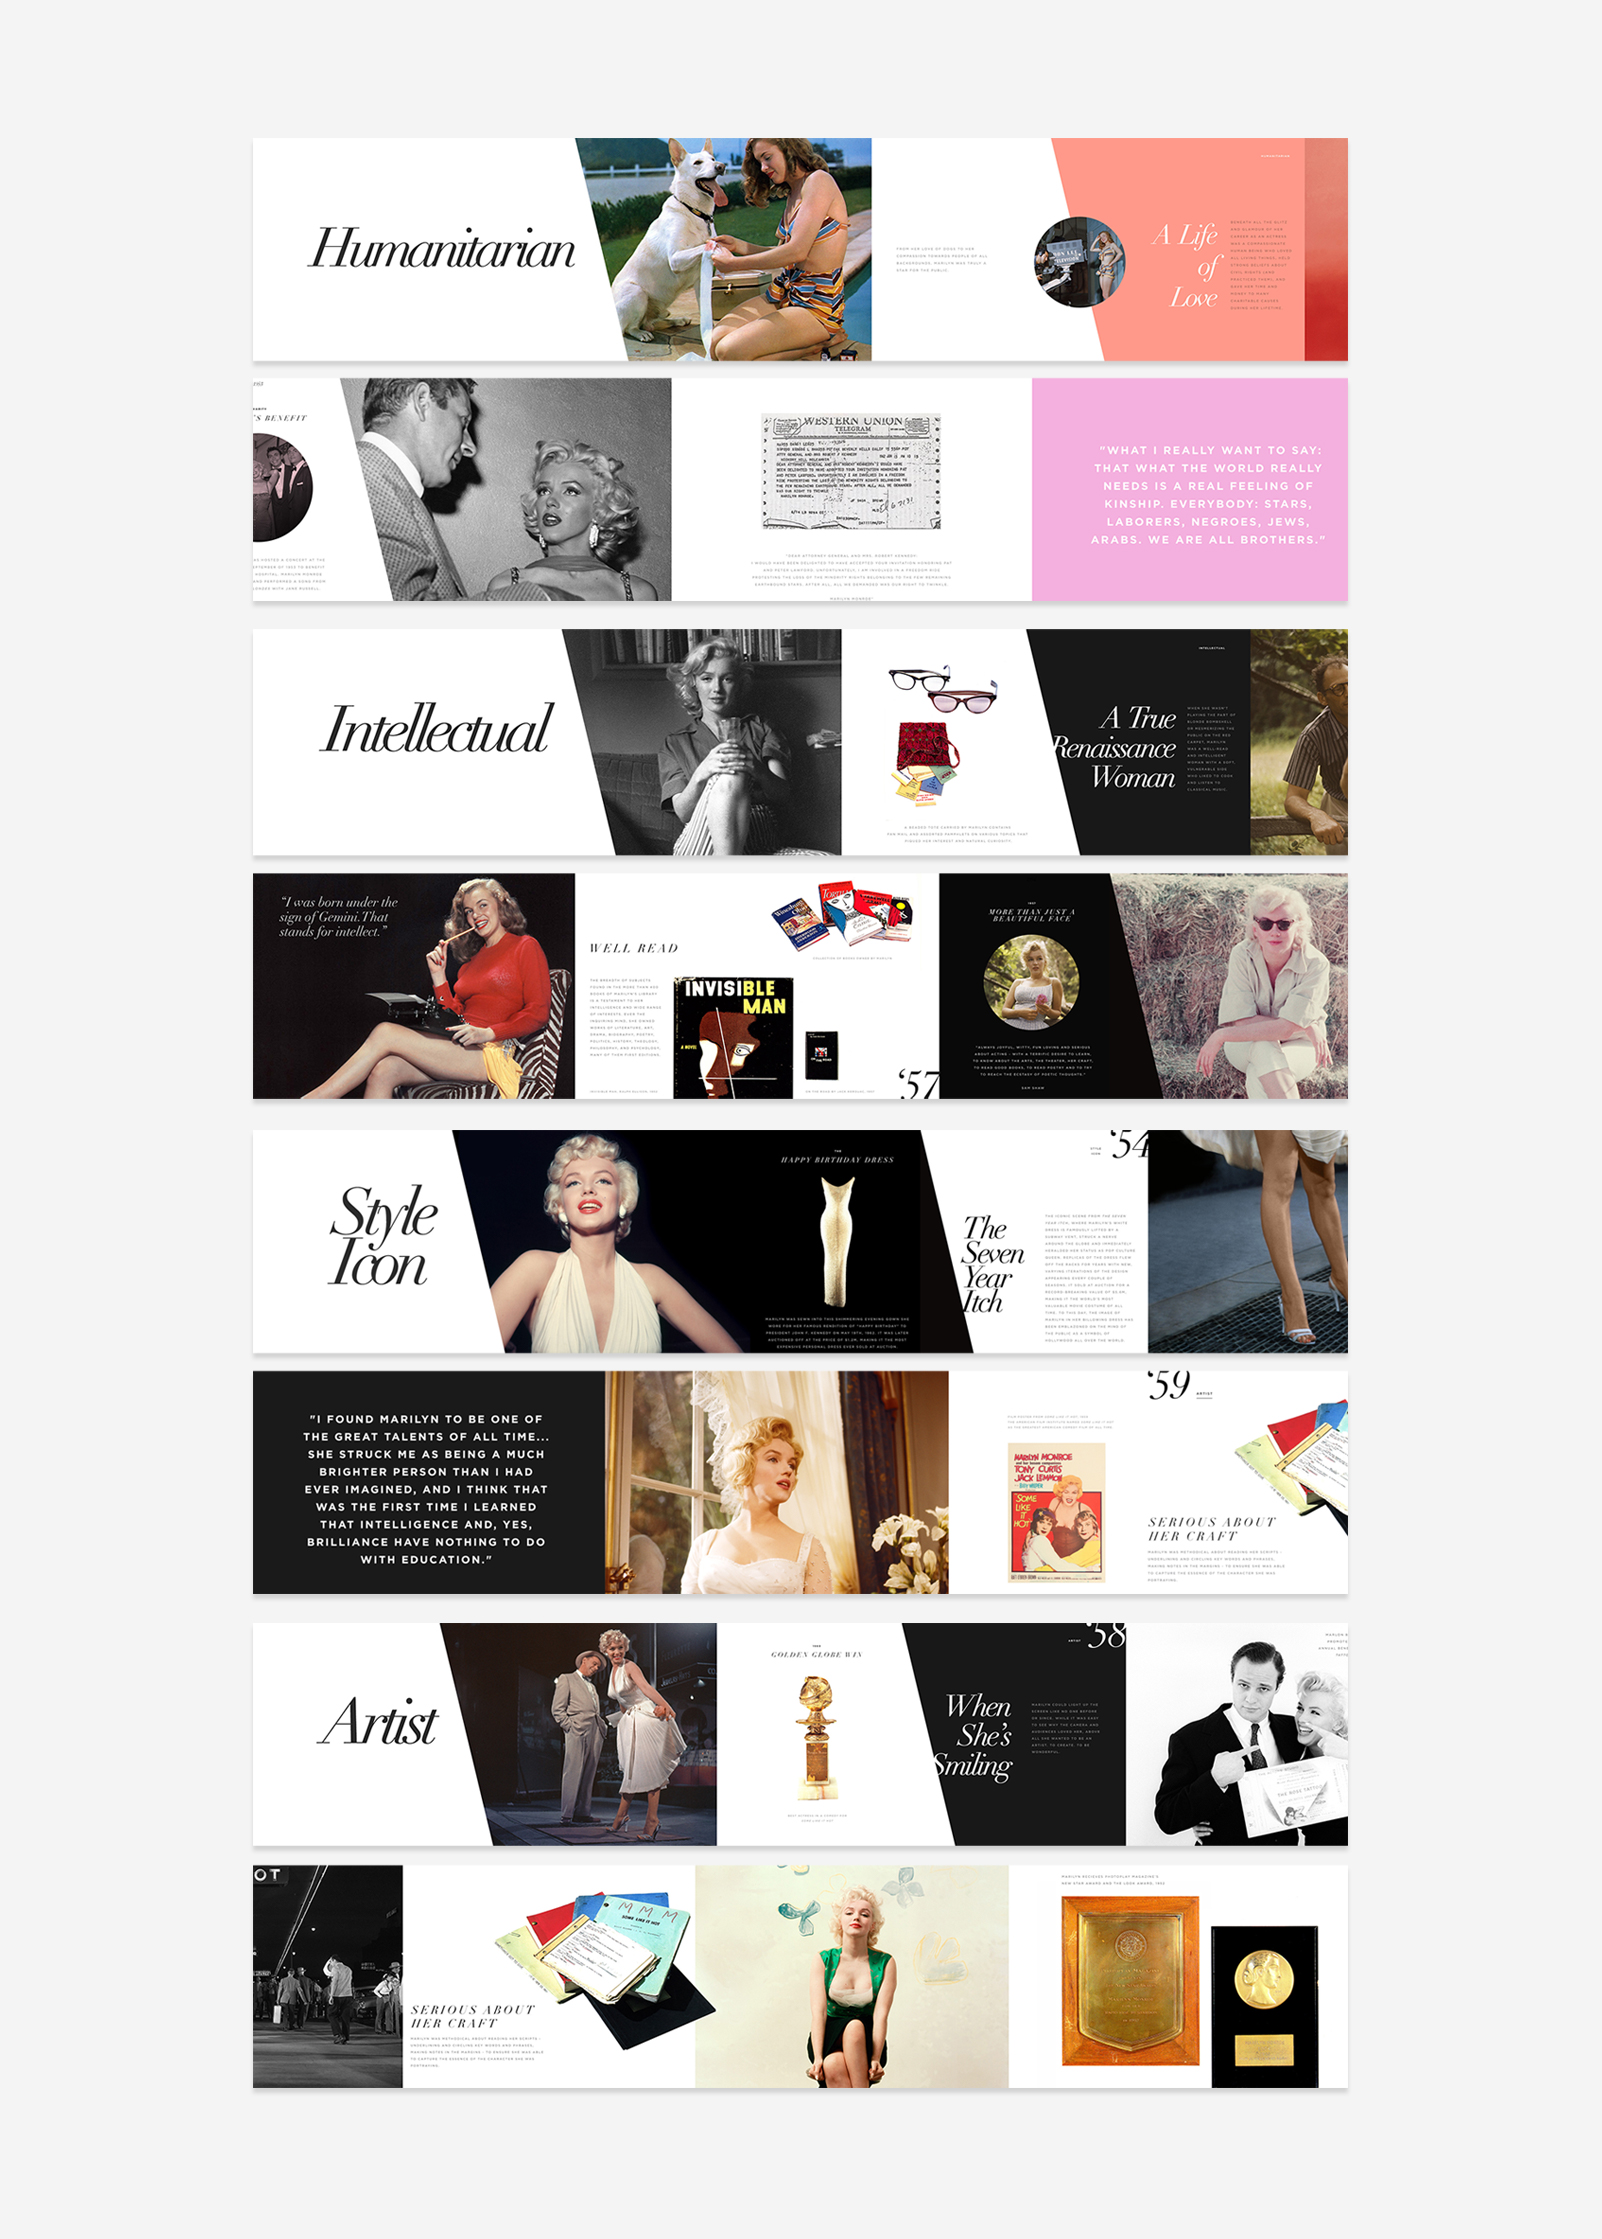 Marilyn_monroe_Website_design_layout